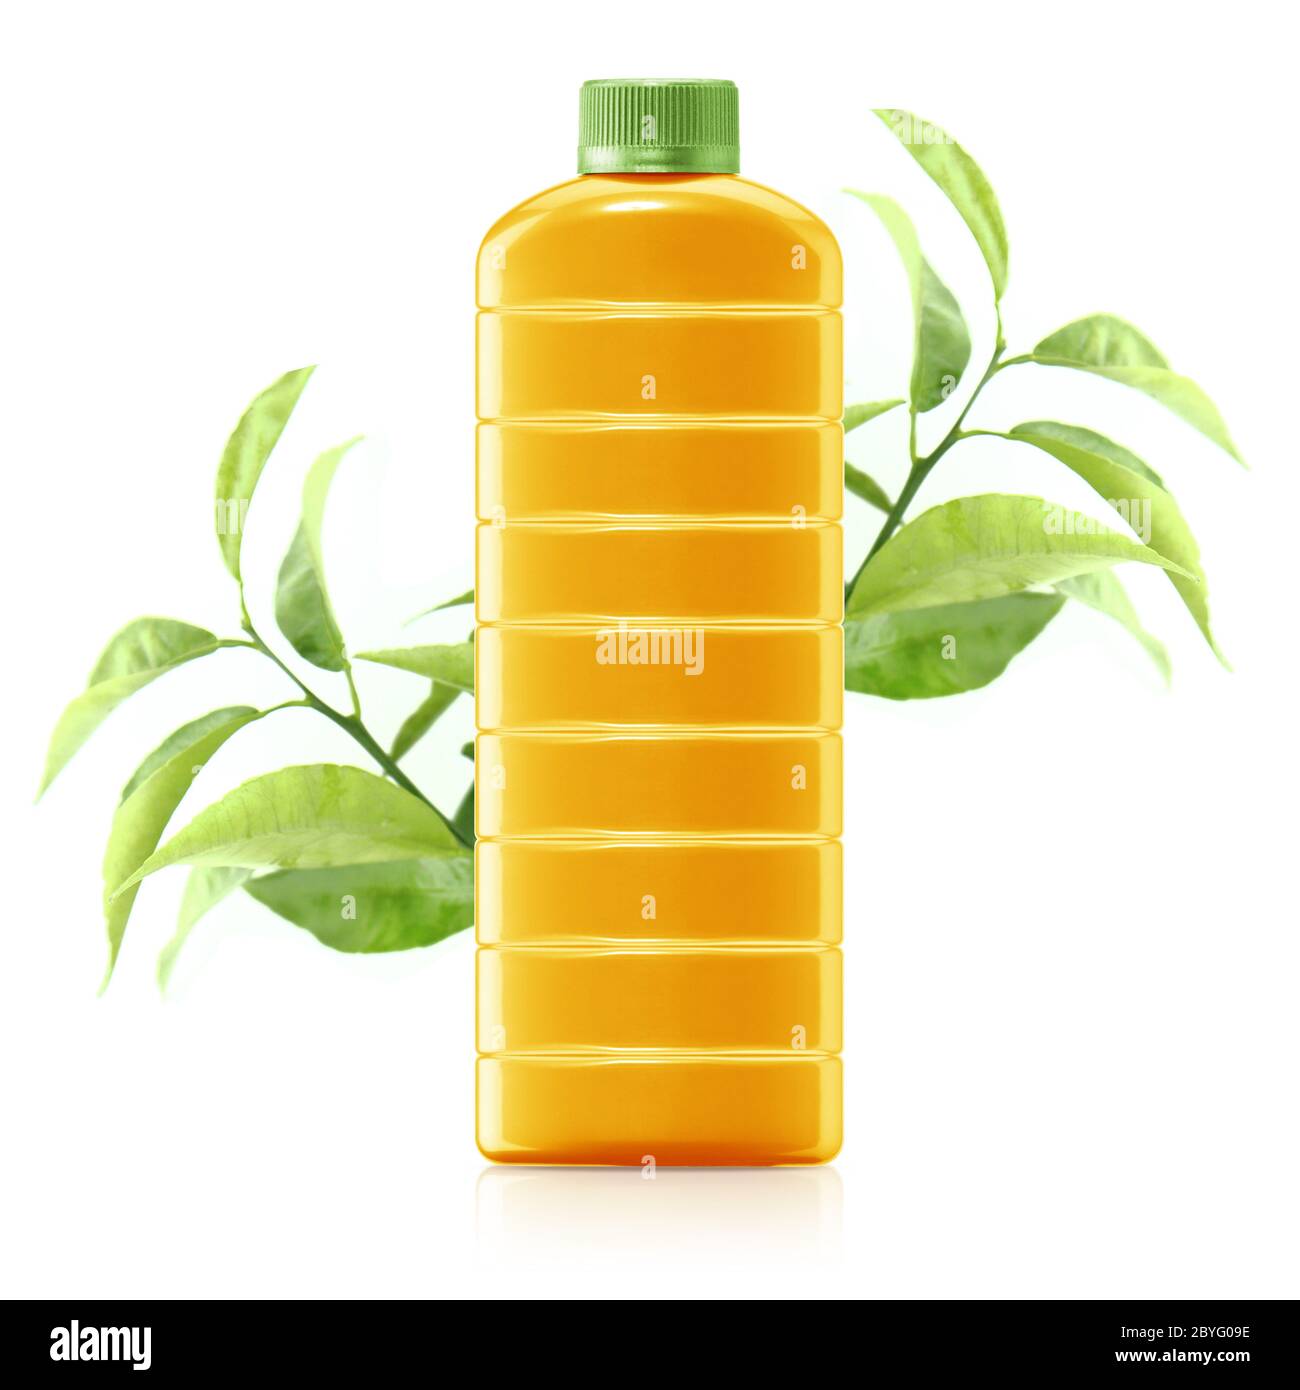 Realistic Detailed 3d Orange Juice Plastic Bottle Vector Stock Illustration  - Download Image Now - iStock